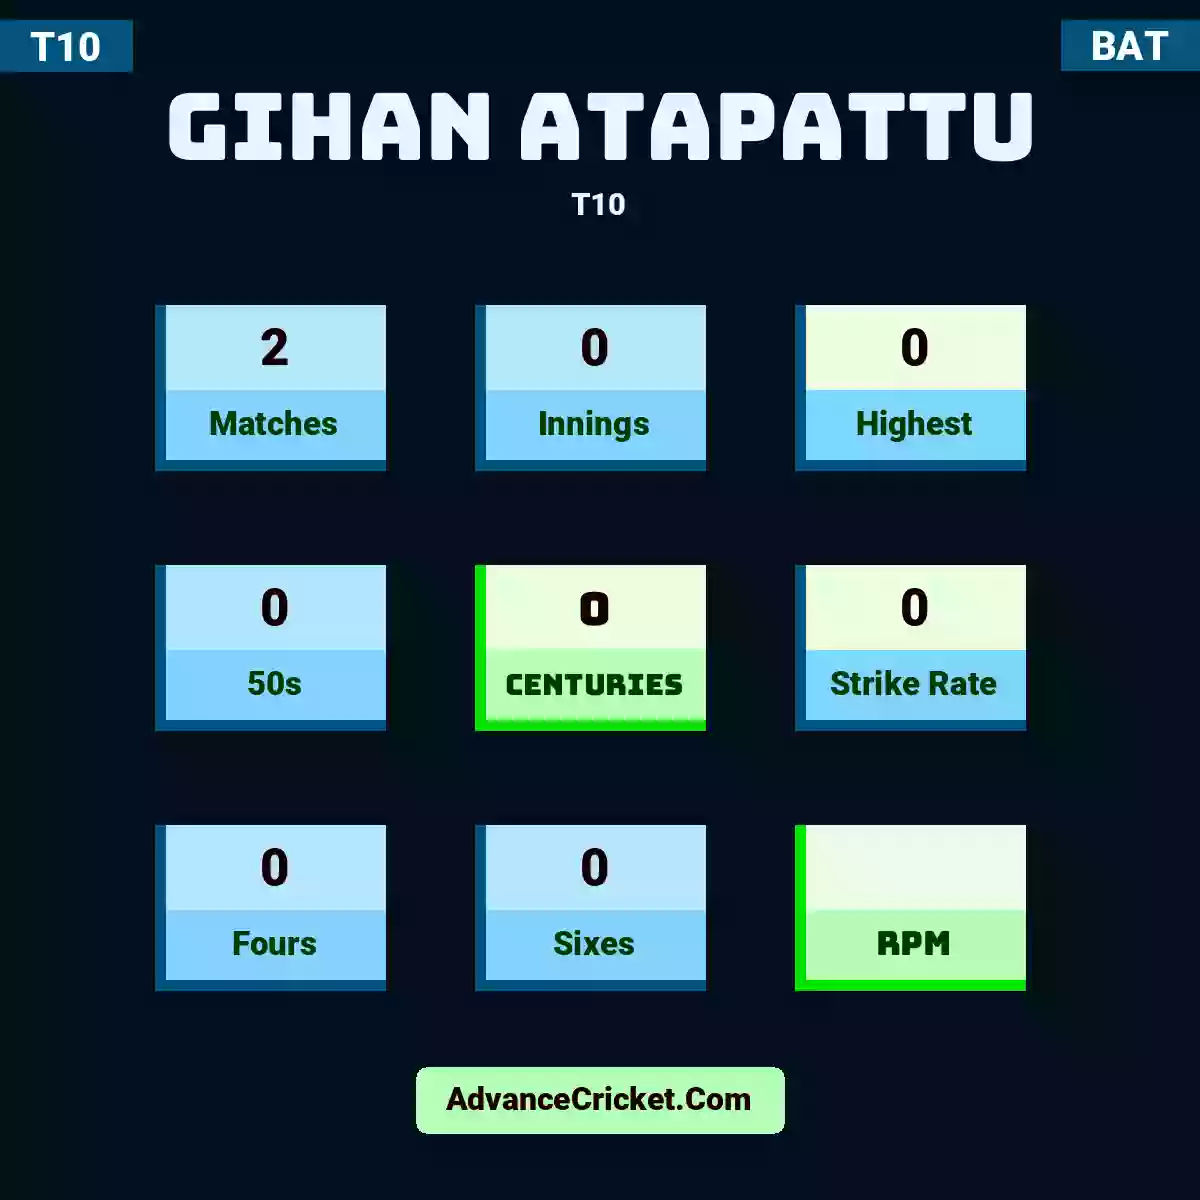 Gihan Atapattu T10 , Gihan Atapattu played 2 matches, scored 0 runs as highest, 0 half-centuries, and 0 centuries, with a strike rate of 0. G.Atapattu hit 0 fours and 0 sixes.